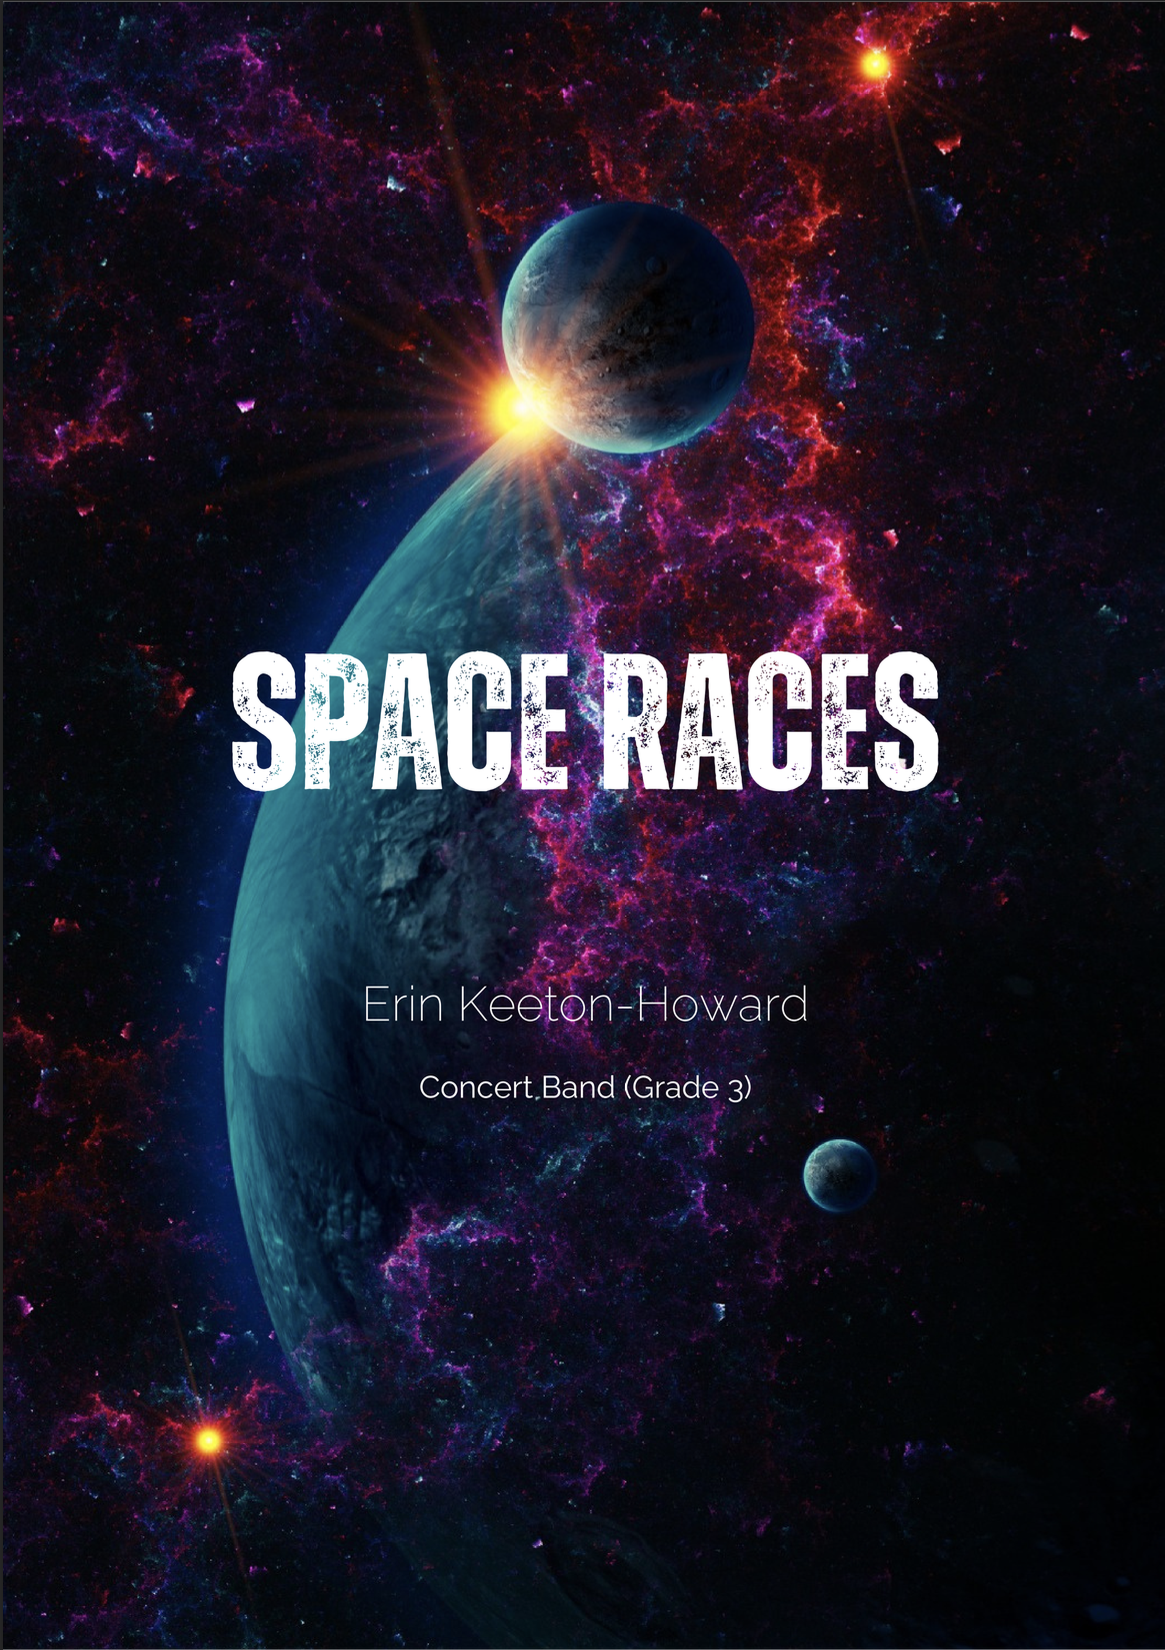 Space Races by Erin Keeton-Howard